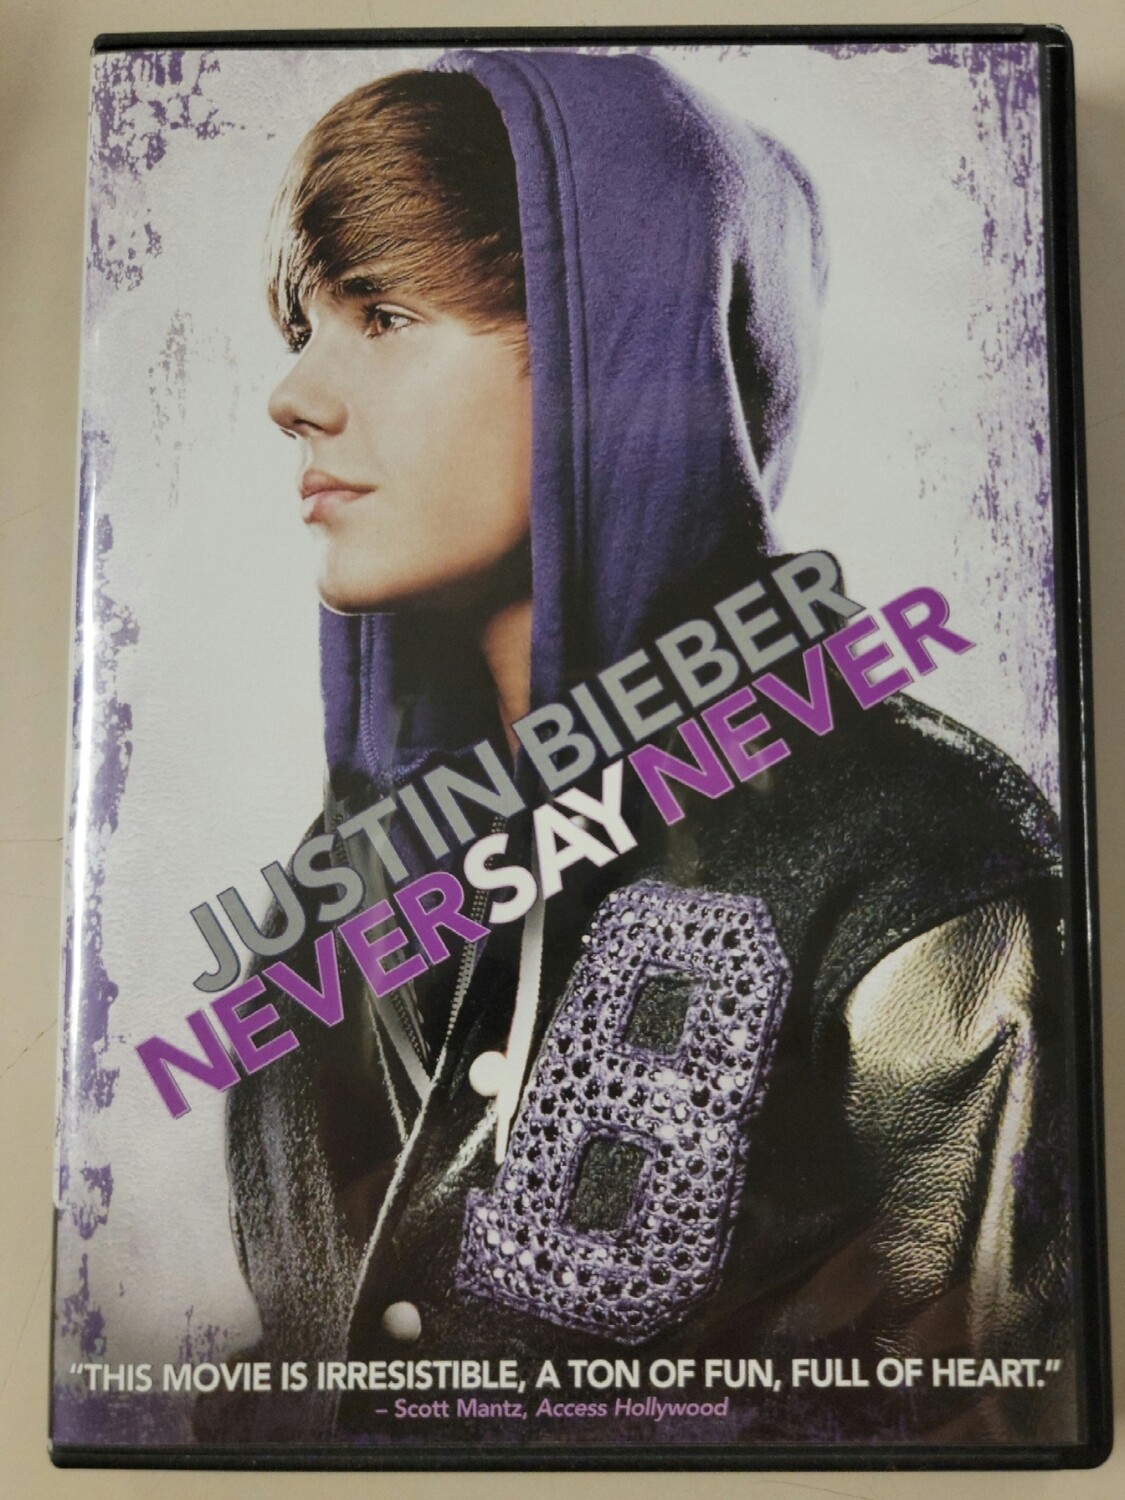 Justin Bieber "Never Say Never", DVD